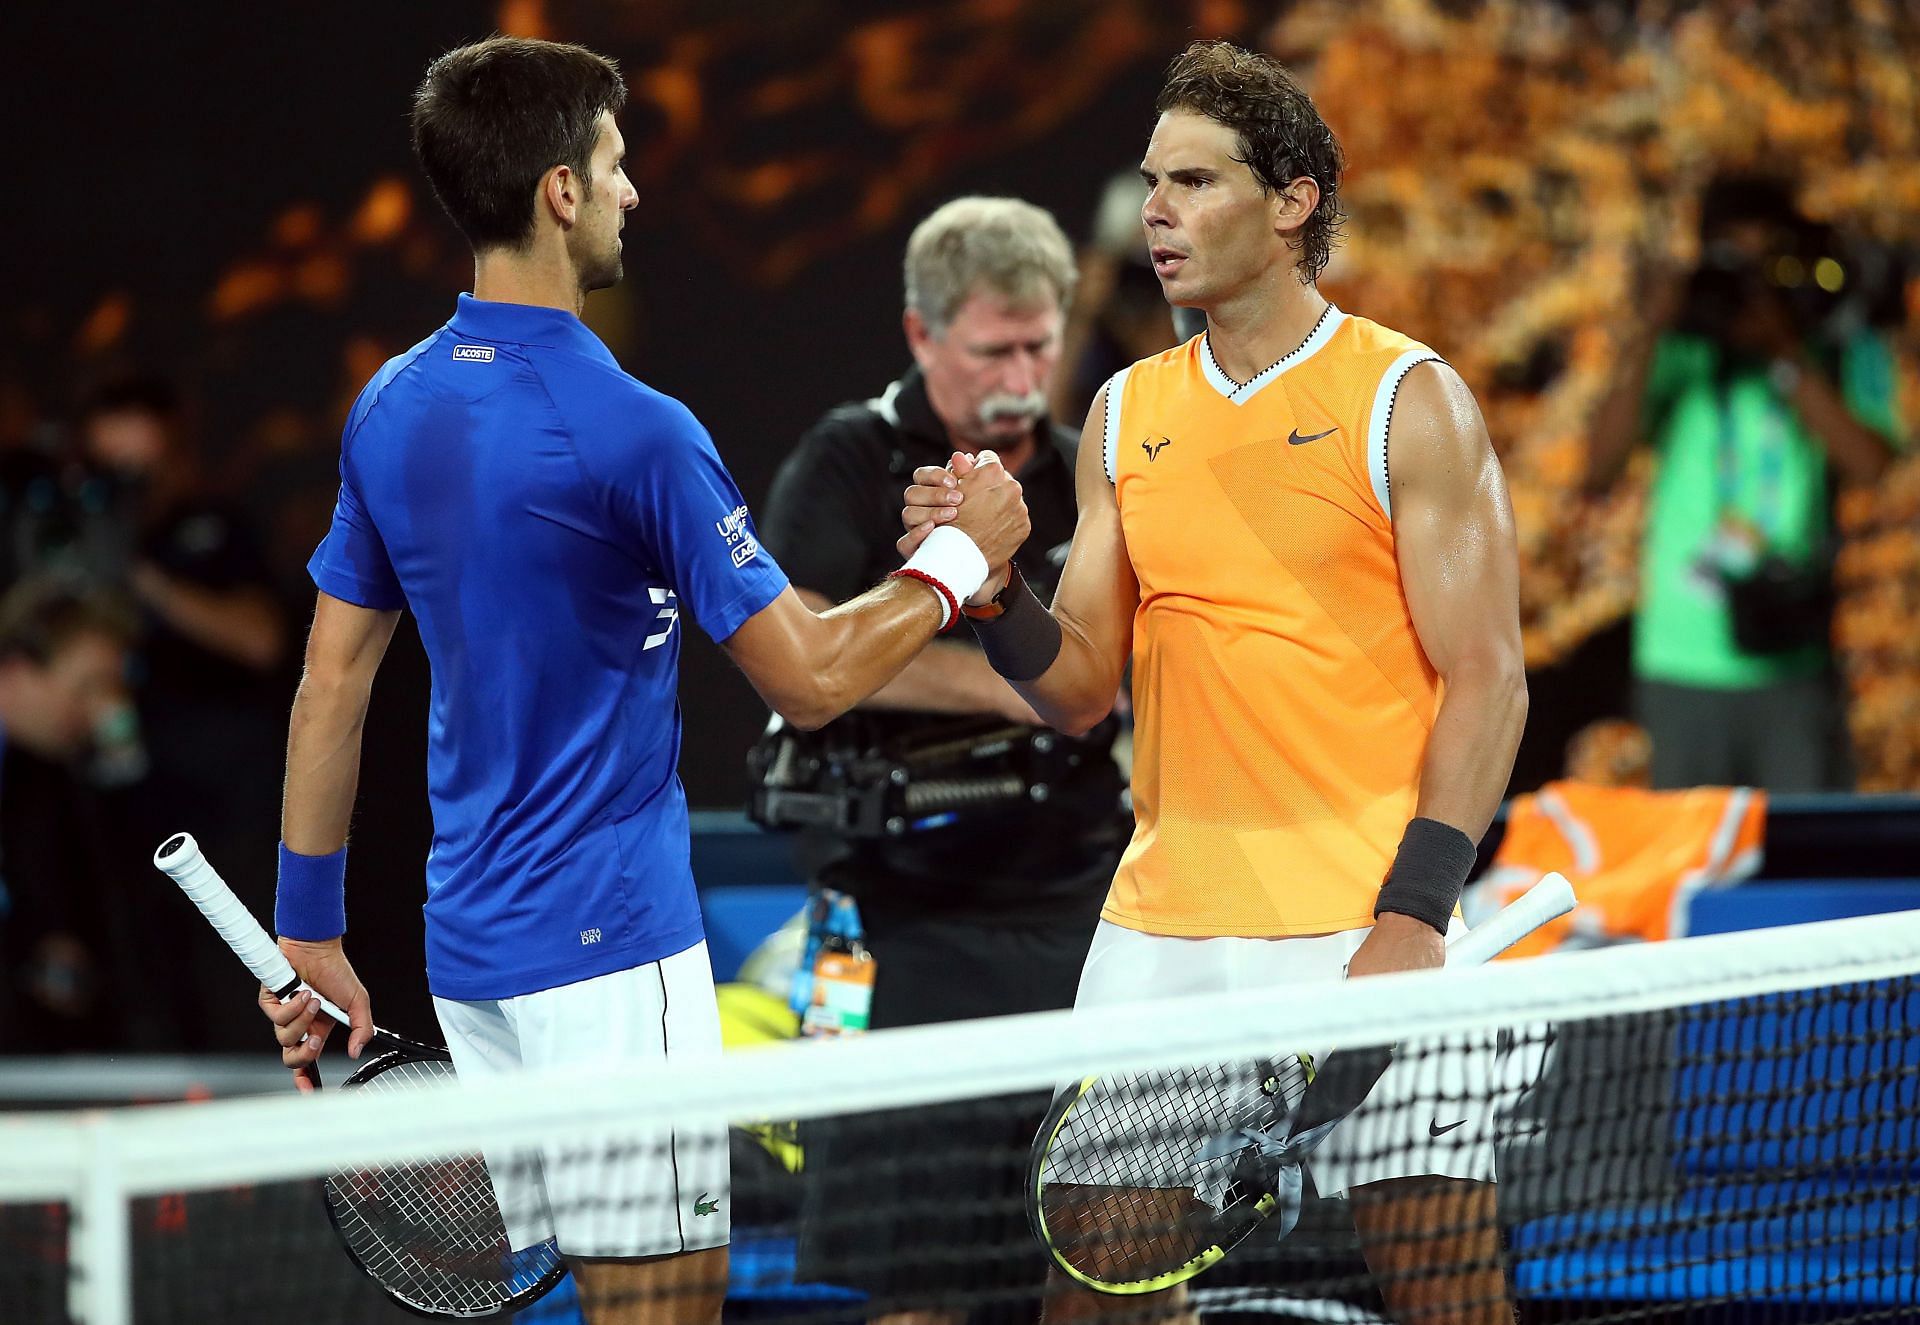  Rafael Nadal and Novak Djokovic at the Australian Open